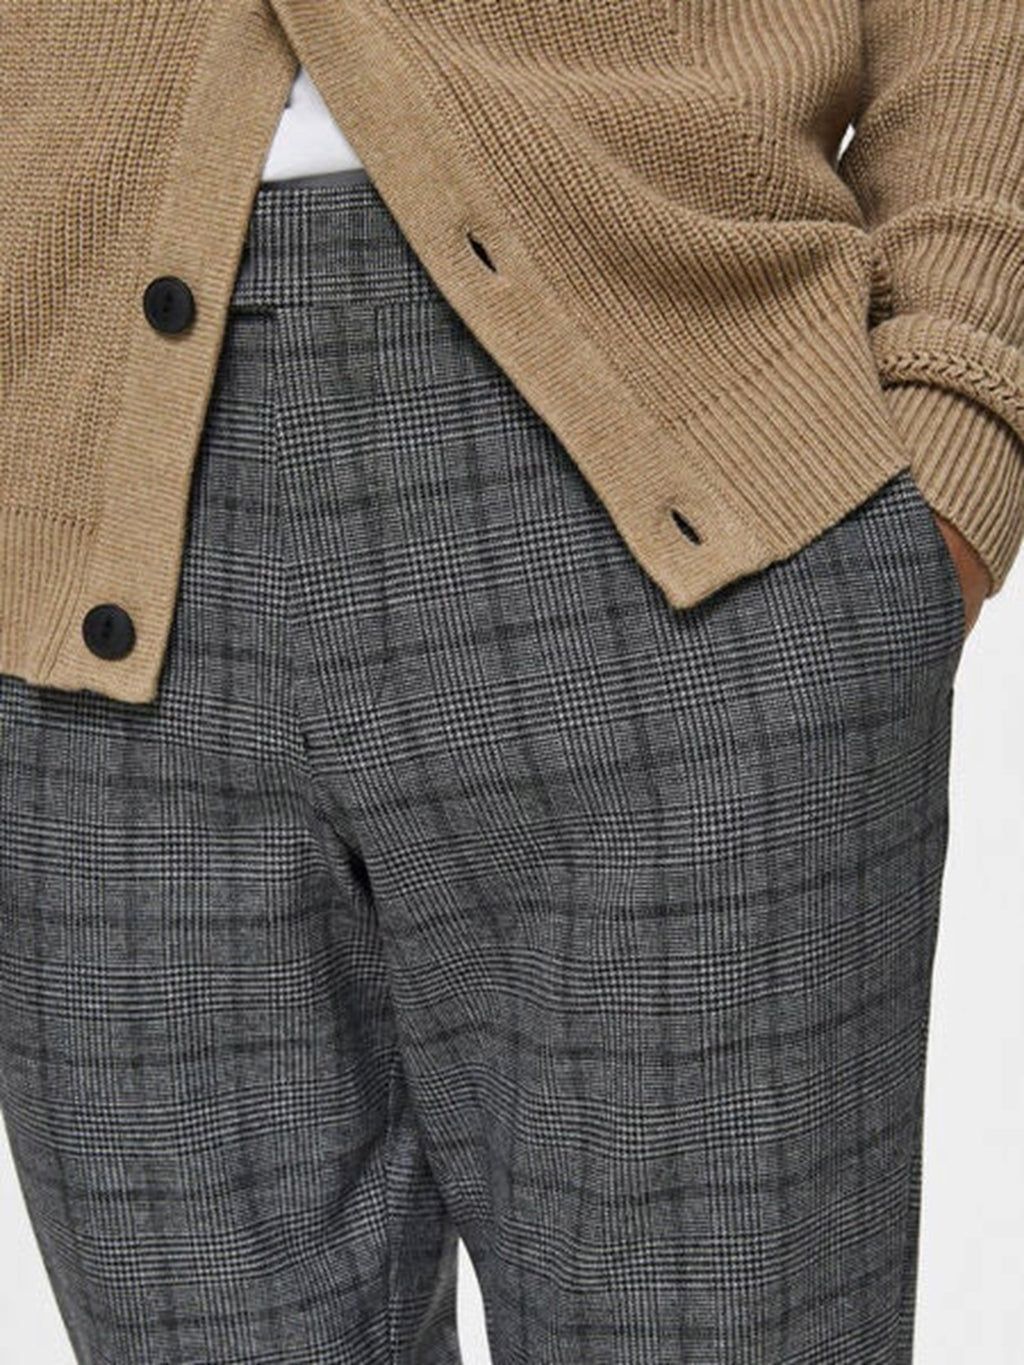 Performance Premium Trousers - Dark grey (checked)